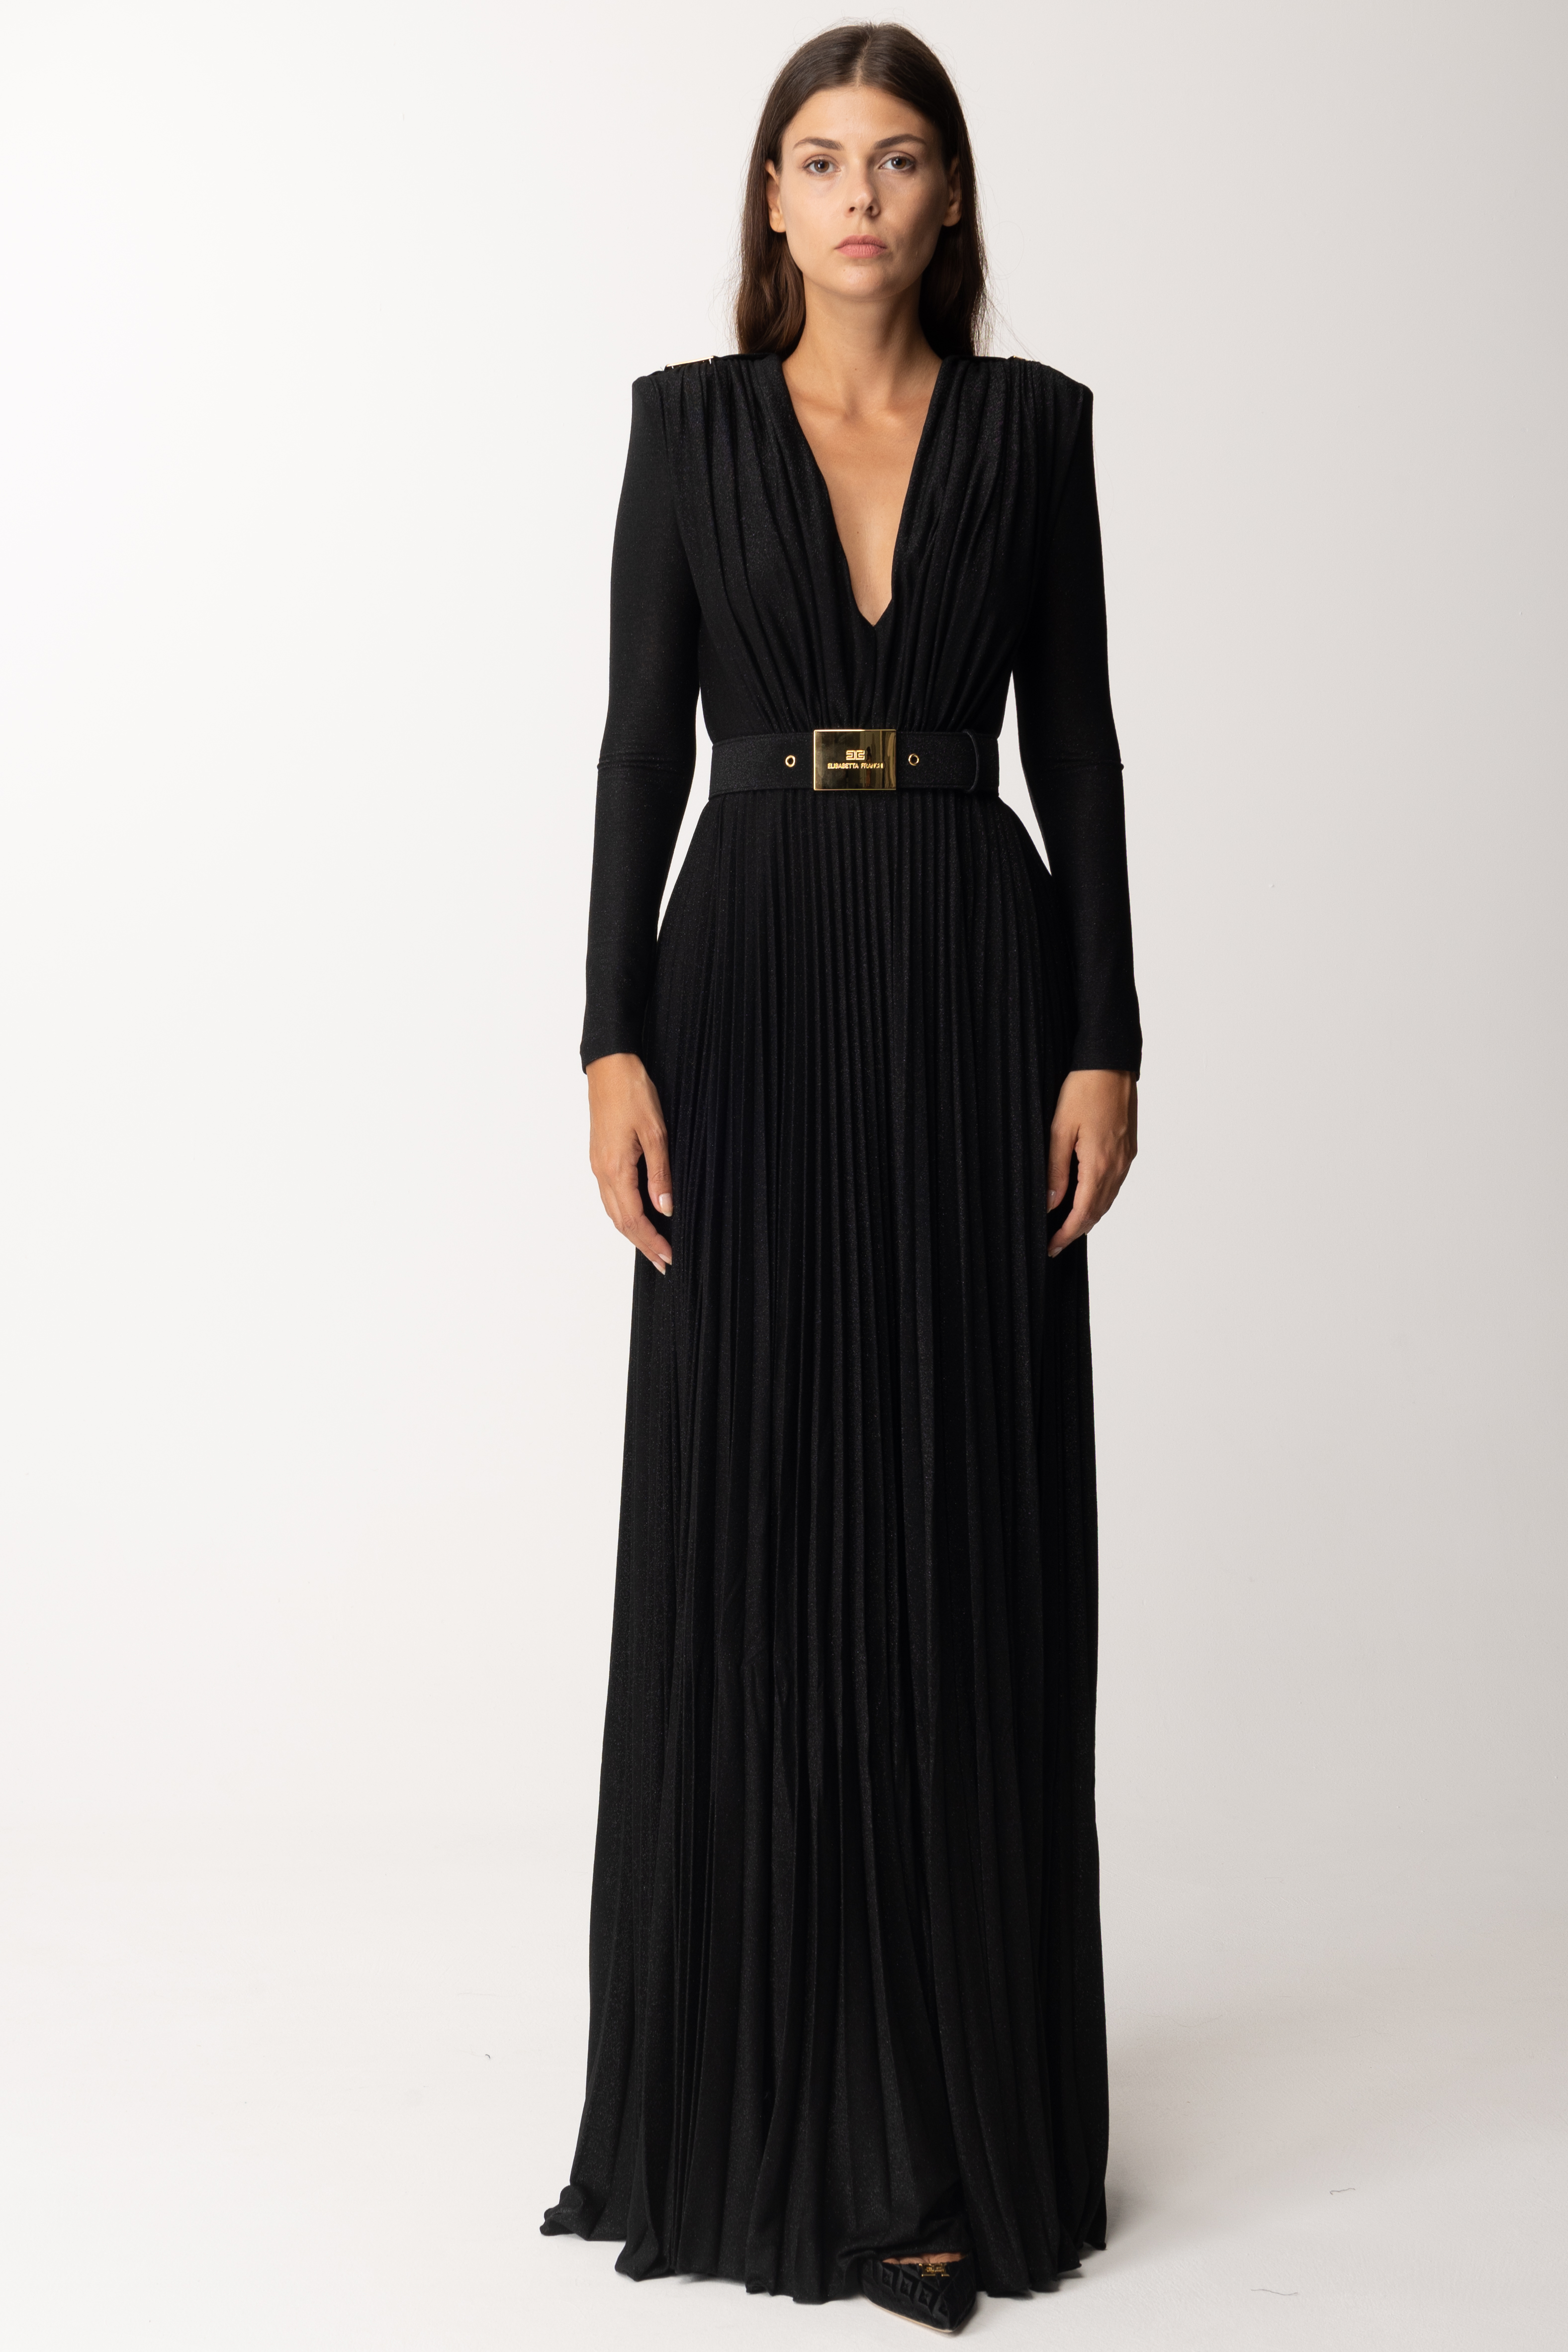 Preview: Elisabetta Franchi Red Carpet lurex dress with belt Nero